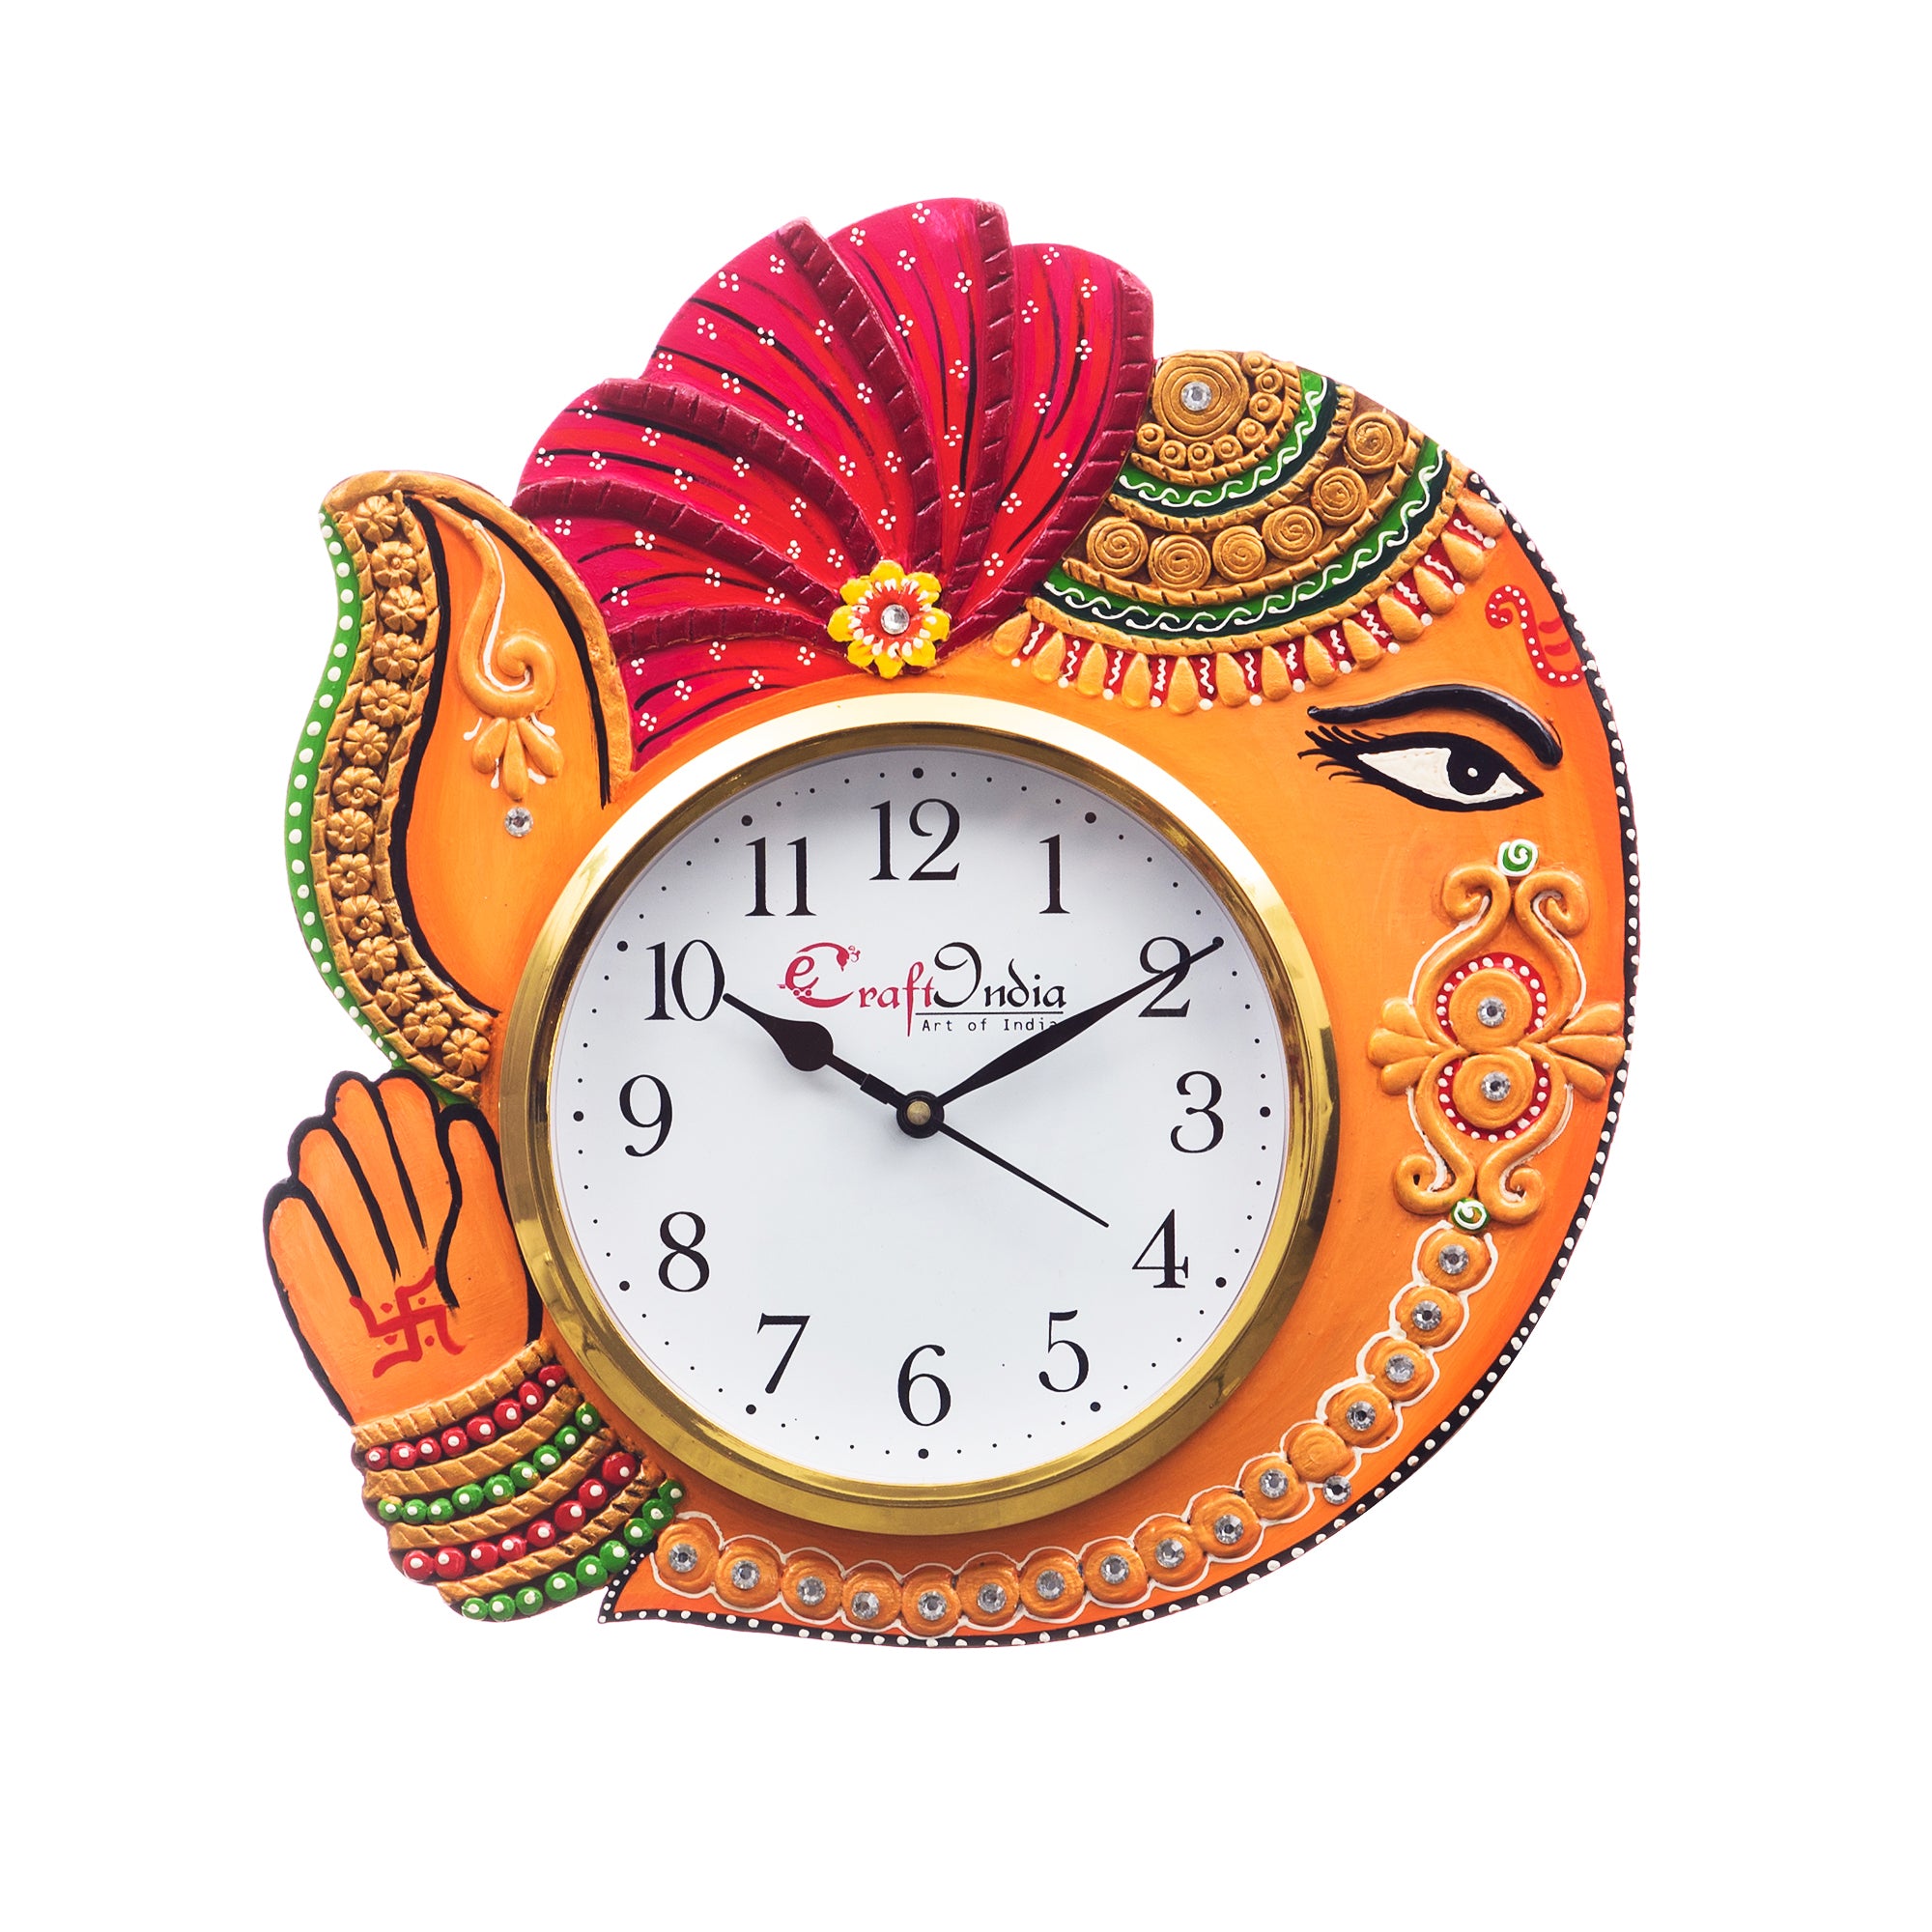 Decorative Handicrafted Paper Mache Lord Ganesha Wall Clock